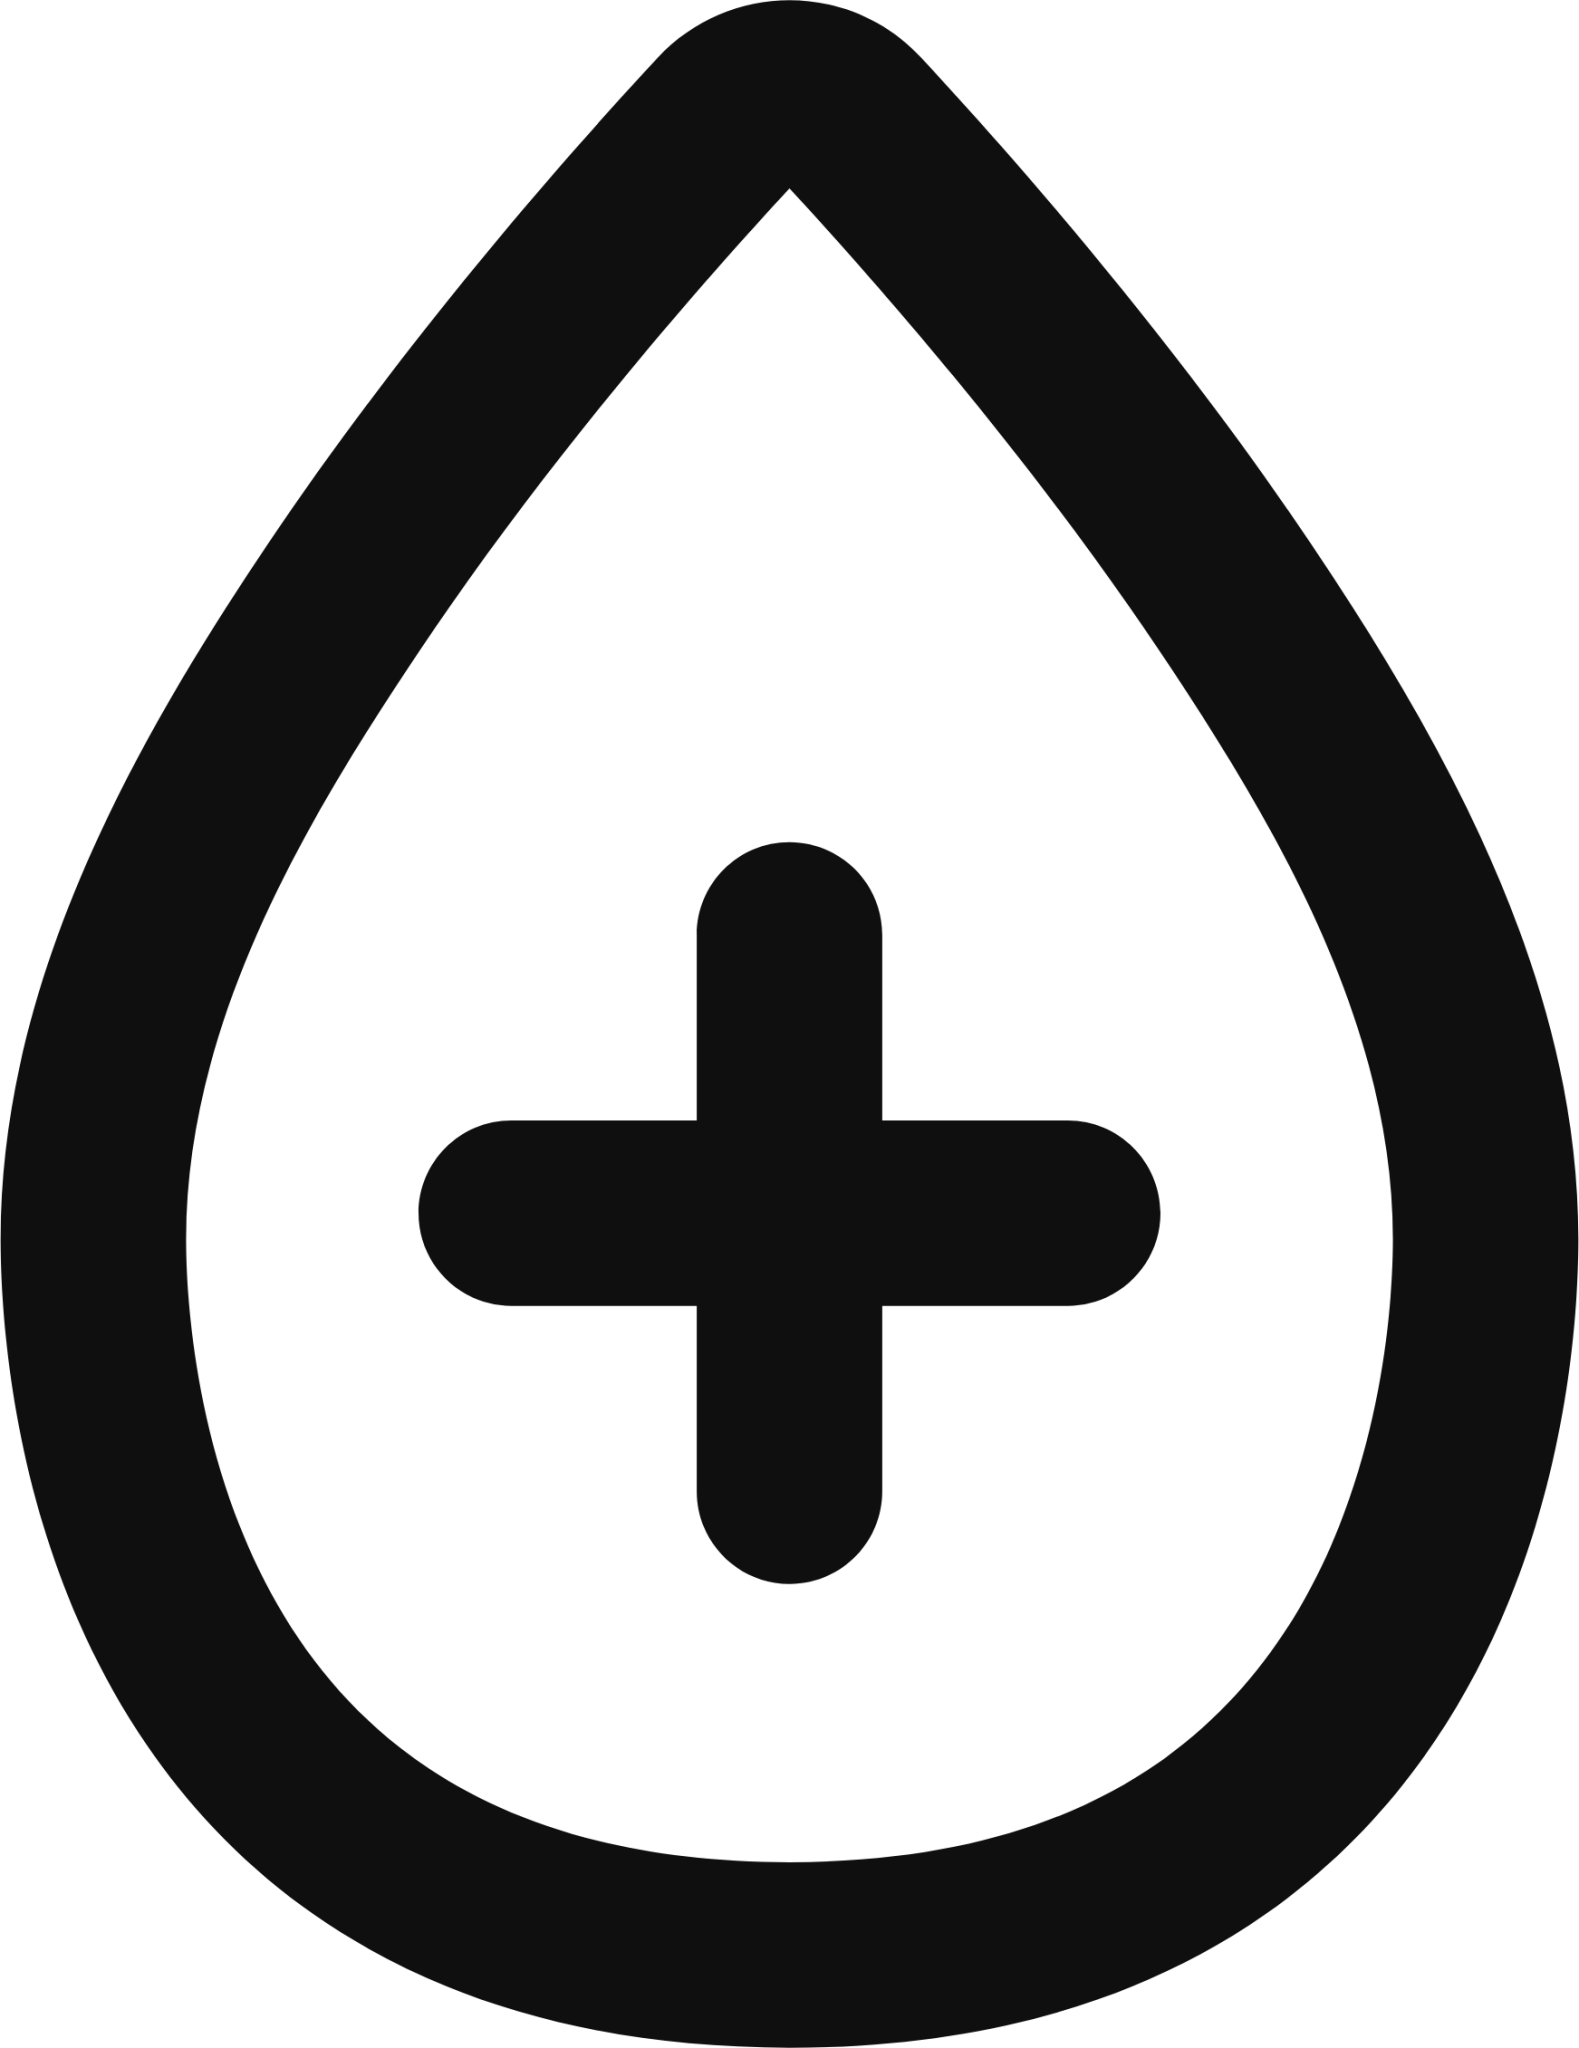 blood type icon